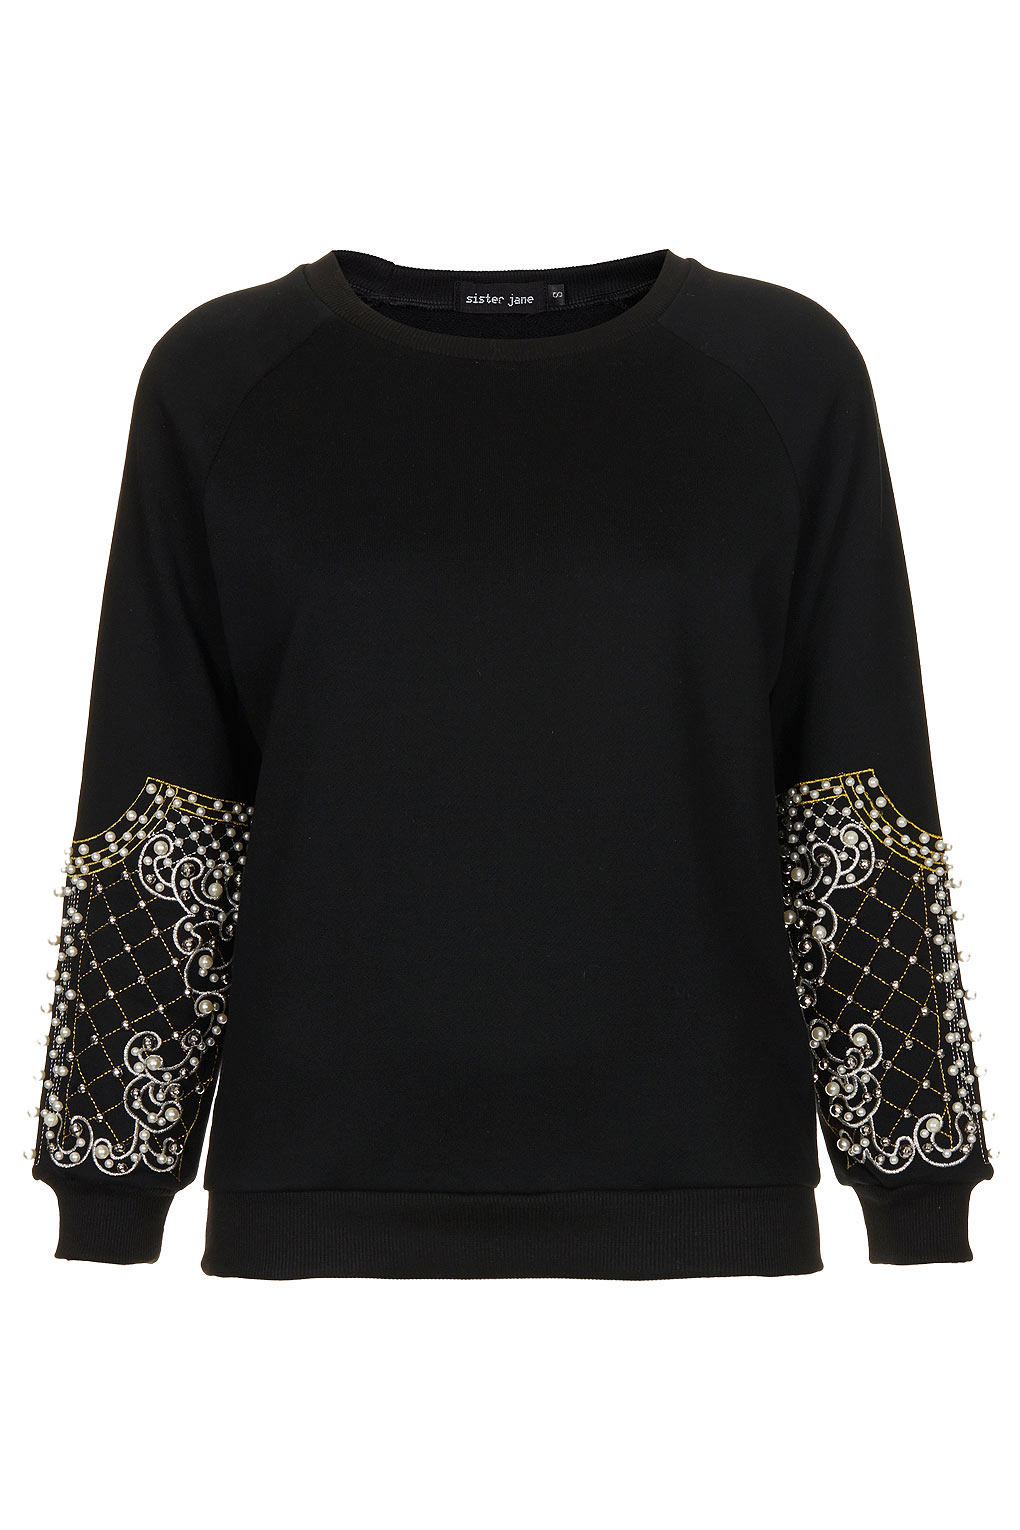 Lyst - Topshop Pearl Sleeve Sweater in Black